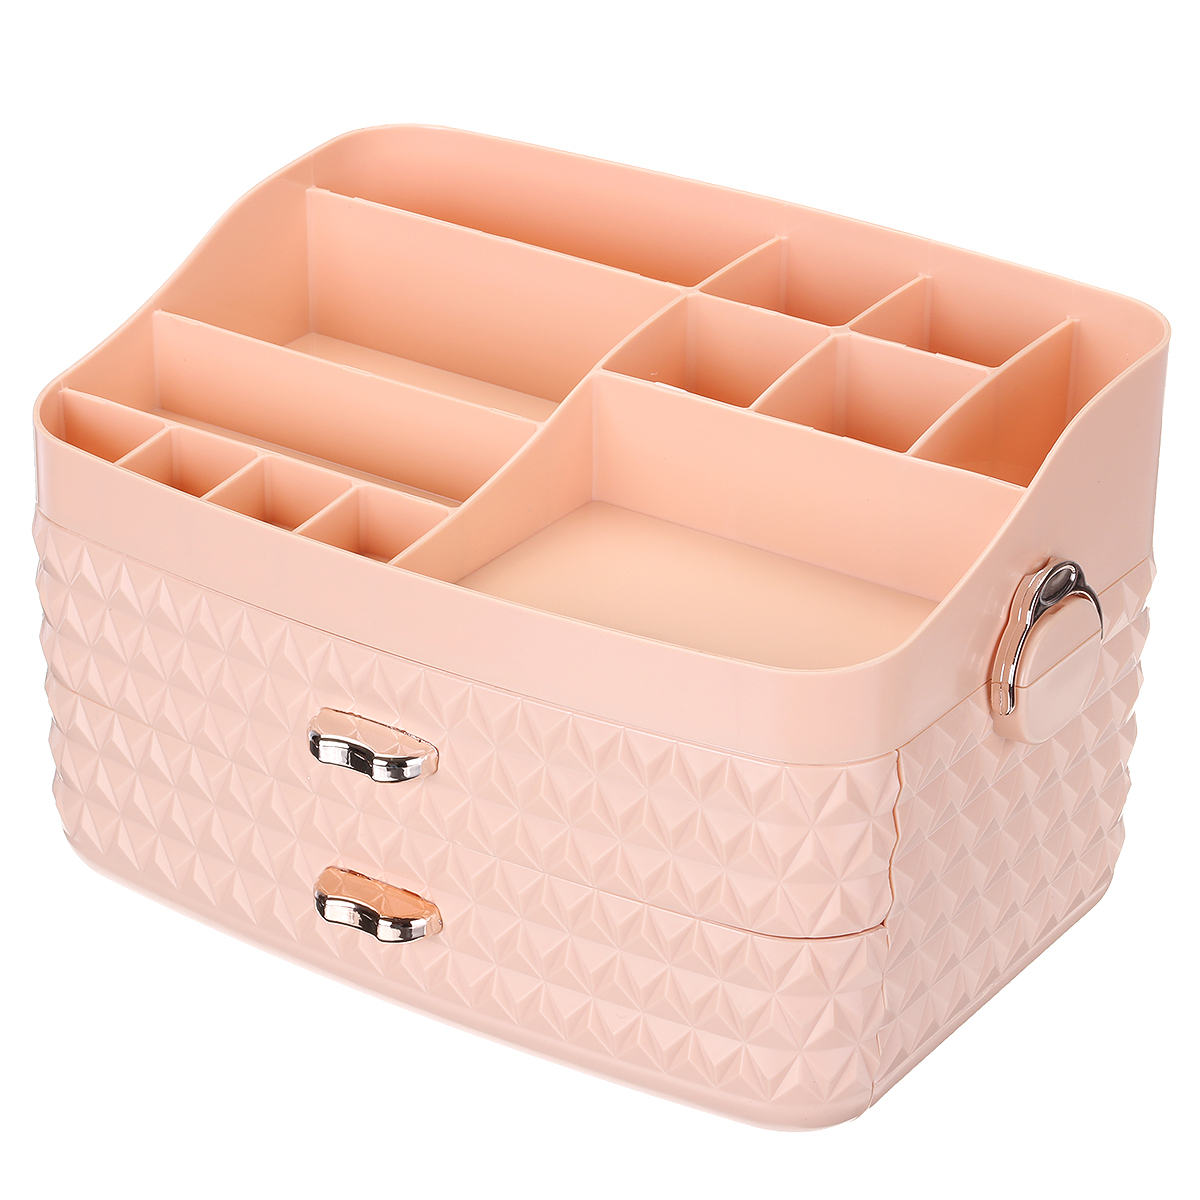 Dustproof-Cosmetic-Storage-Box-with-Drawer-Large-Capacity-Desktop-Furnishings-Organizer-Home-Desk-Su-1777438-22